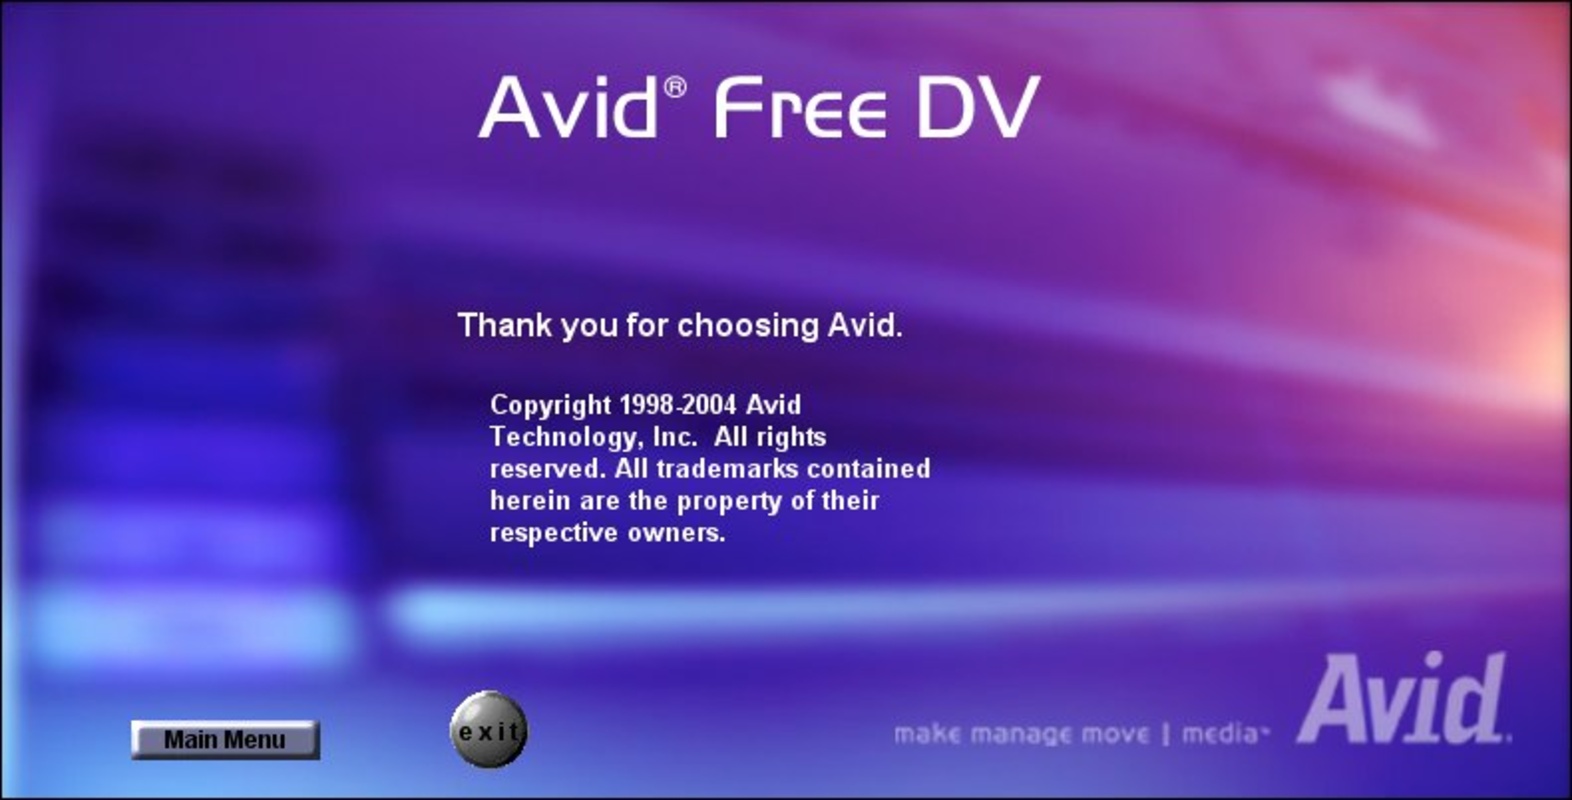 Avid Free DV 1.6.1 feature